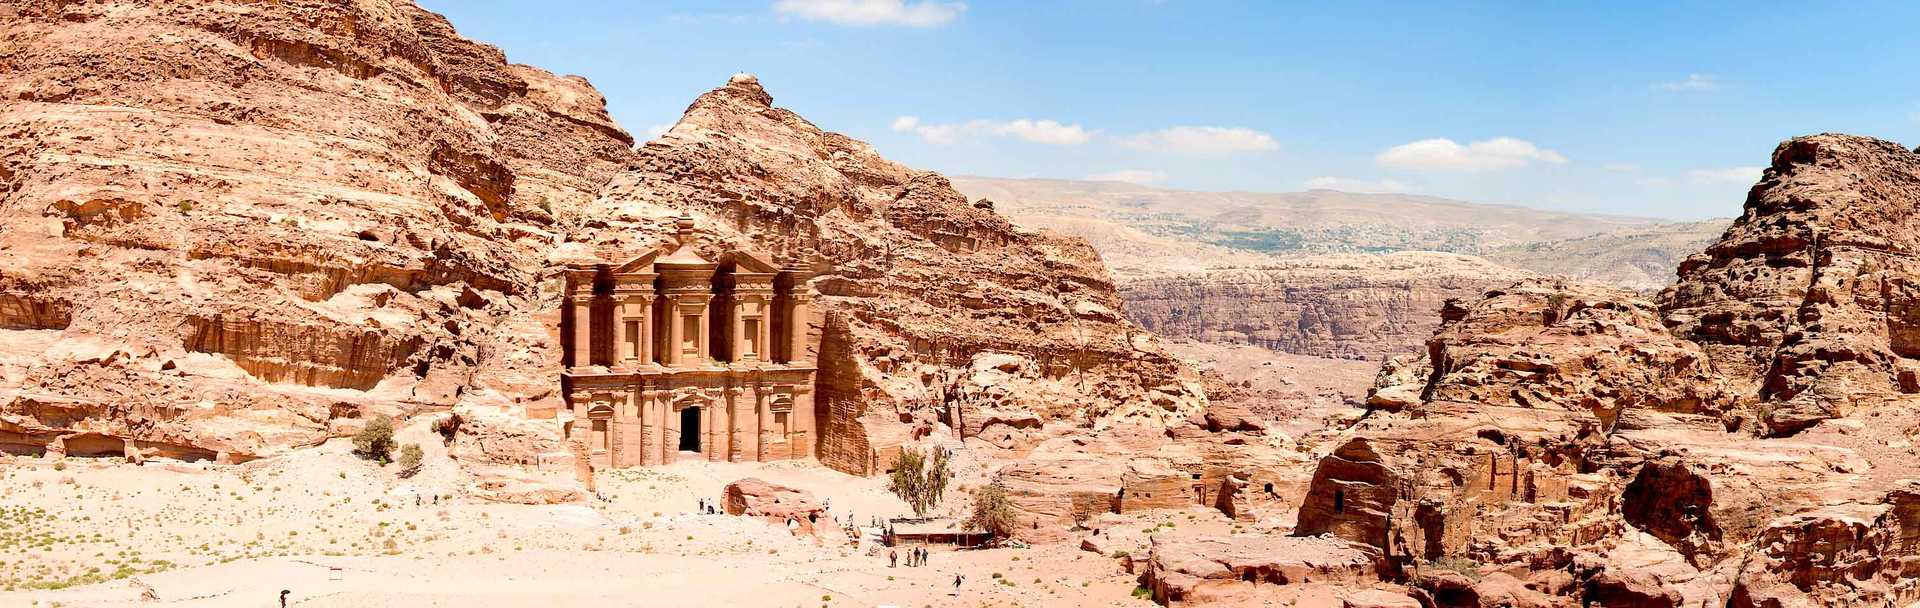 The Monastery, Ad Deir, in Petra, Jordan